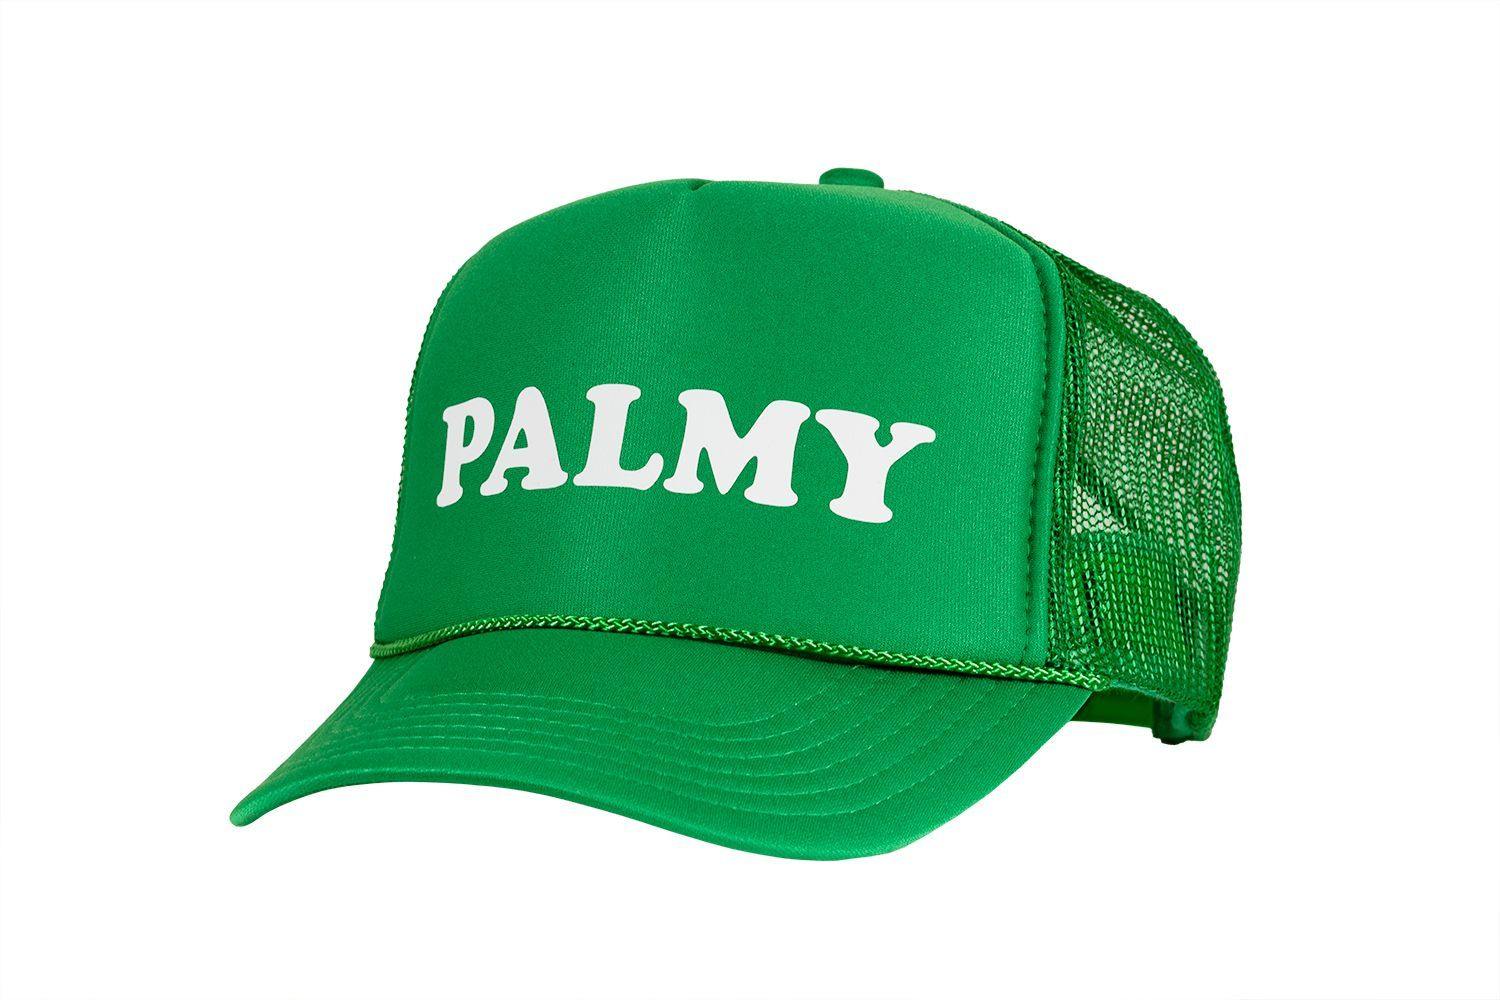 Palm Beach high crown trucker cap with mesh back and snapback - Tropic Trucker Australia®